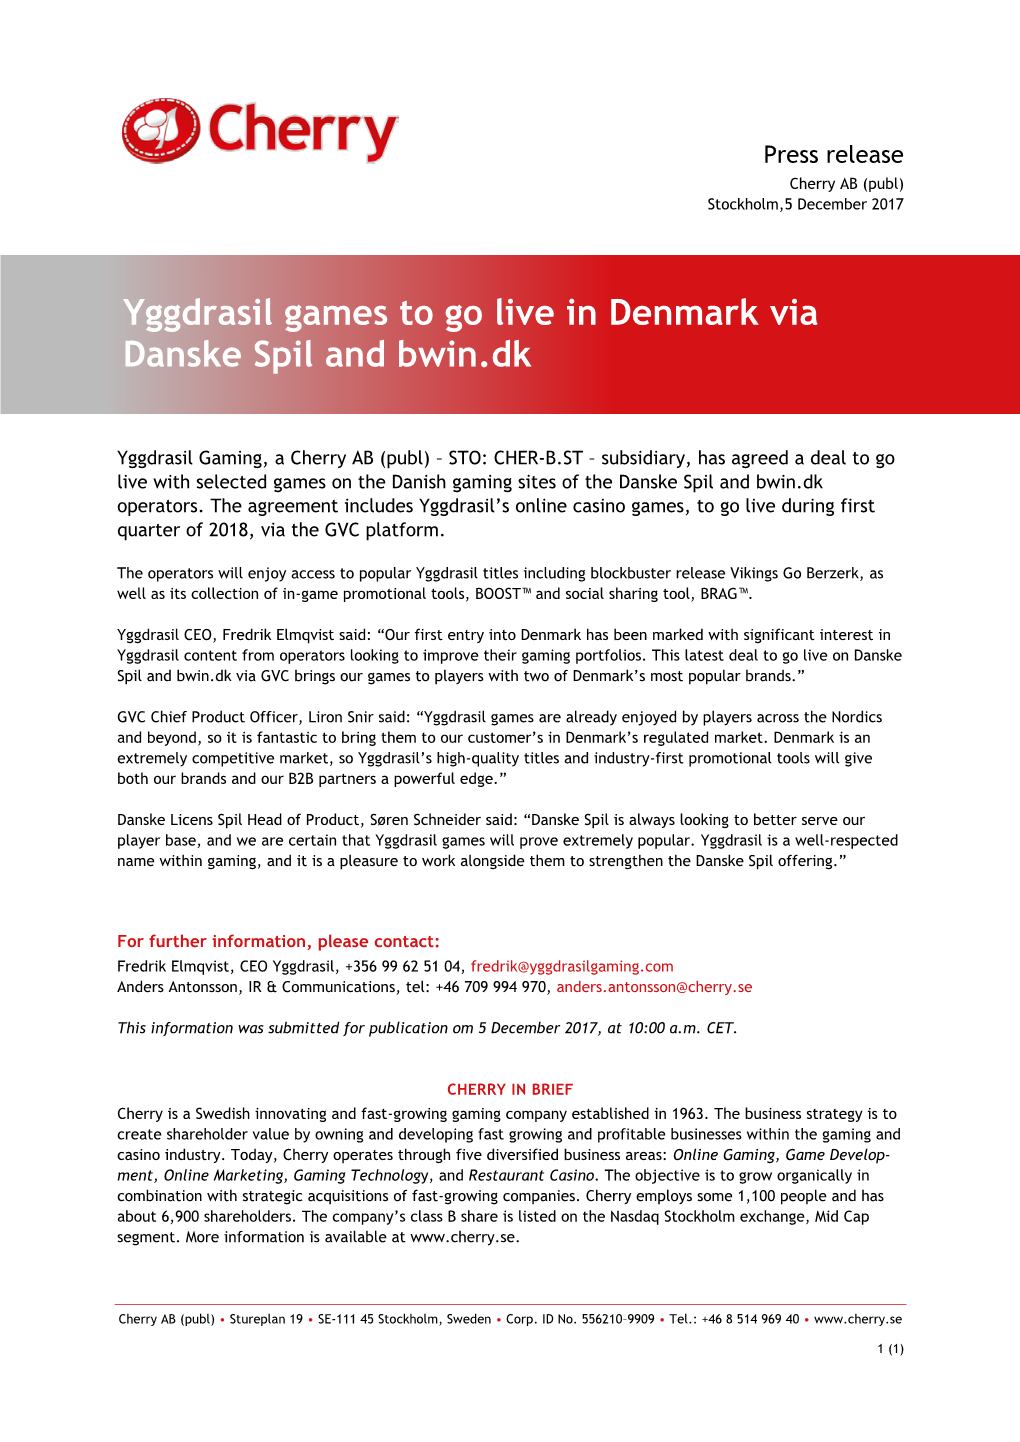 Yggdrasil Games to Go Live in Denmark Via Danske Spil and Bwin.Dk